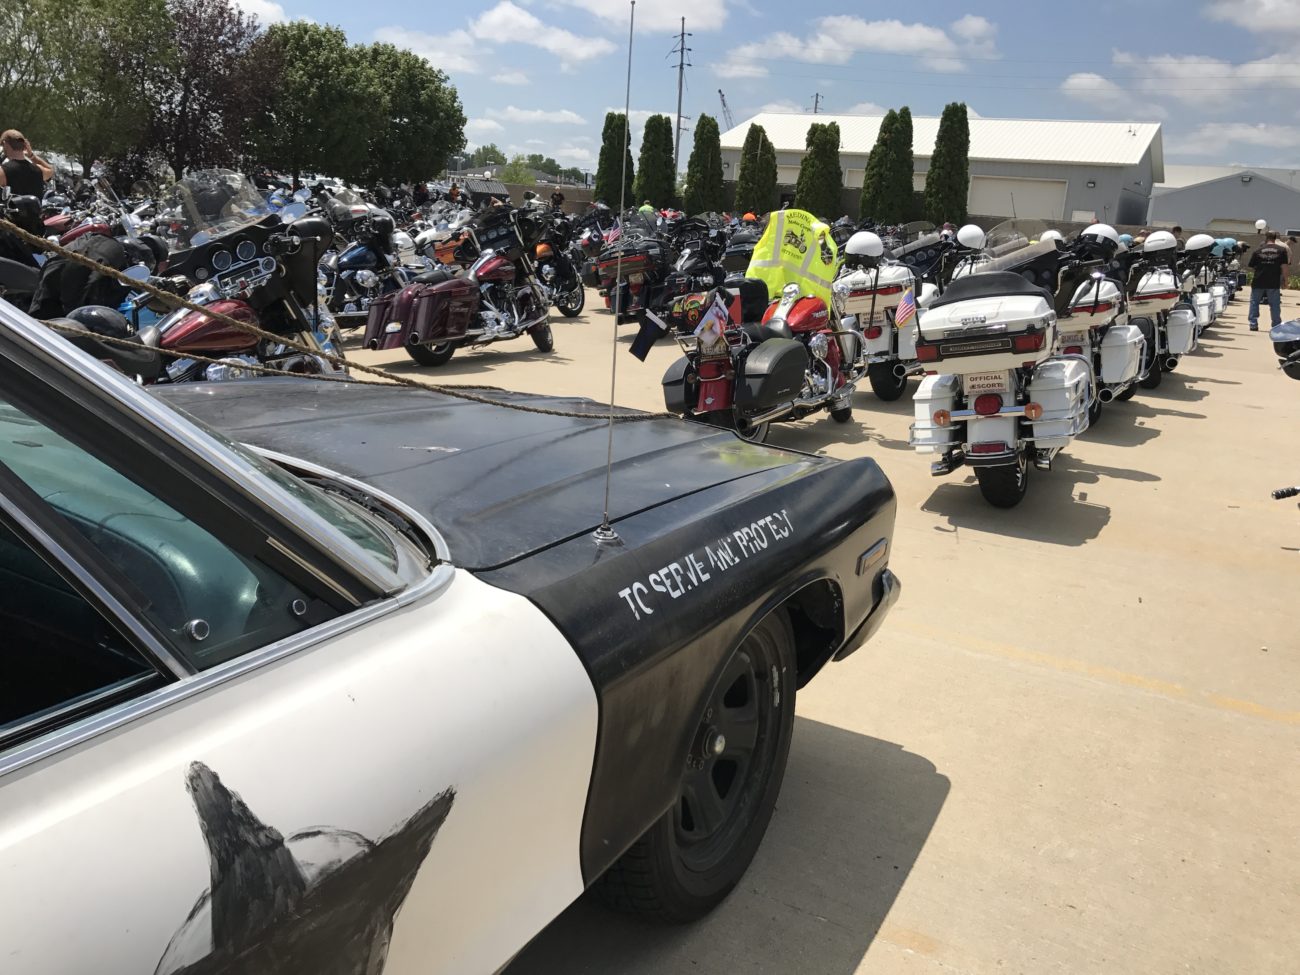 Chuck's Harley Davidson in Bloomington - 10th Annual Illinois State Police Heritage Foundation Fun Run 2017